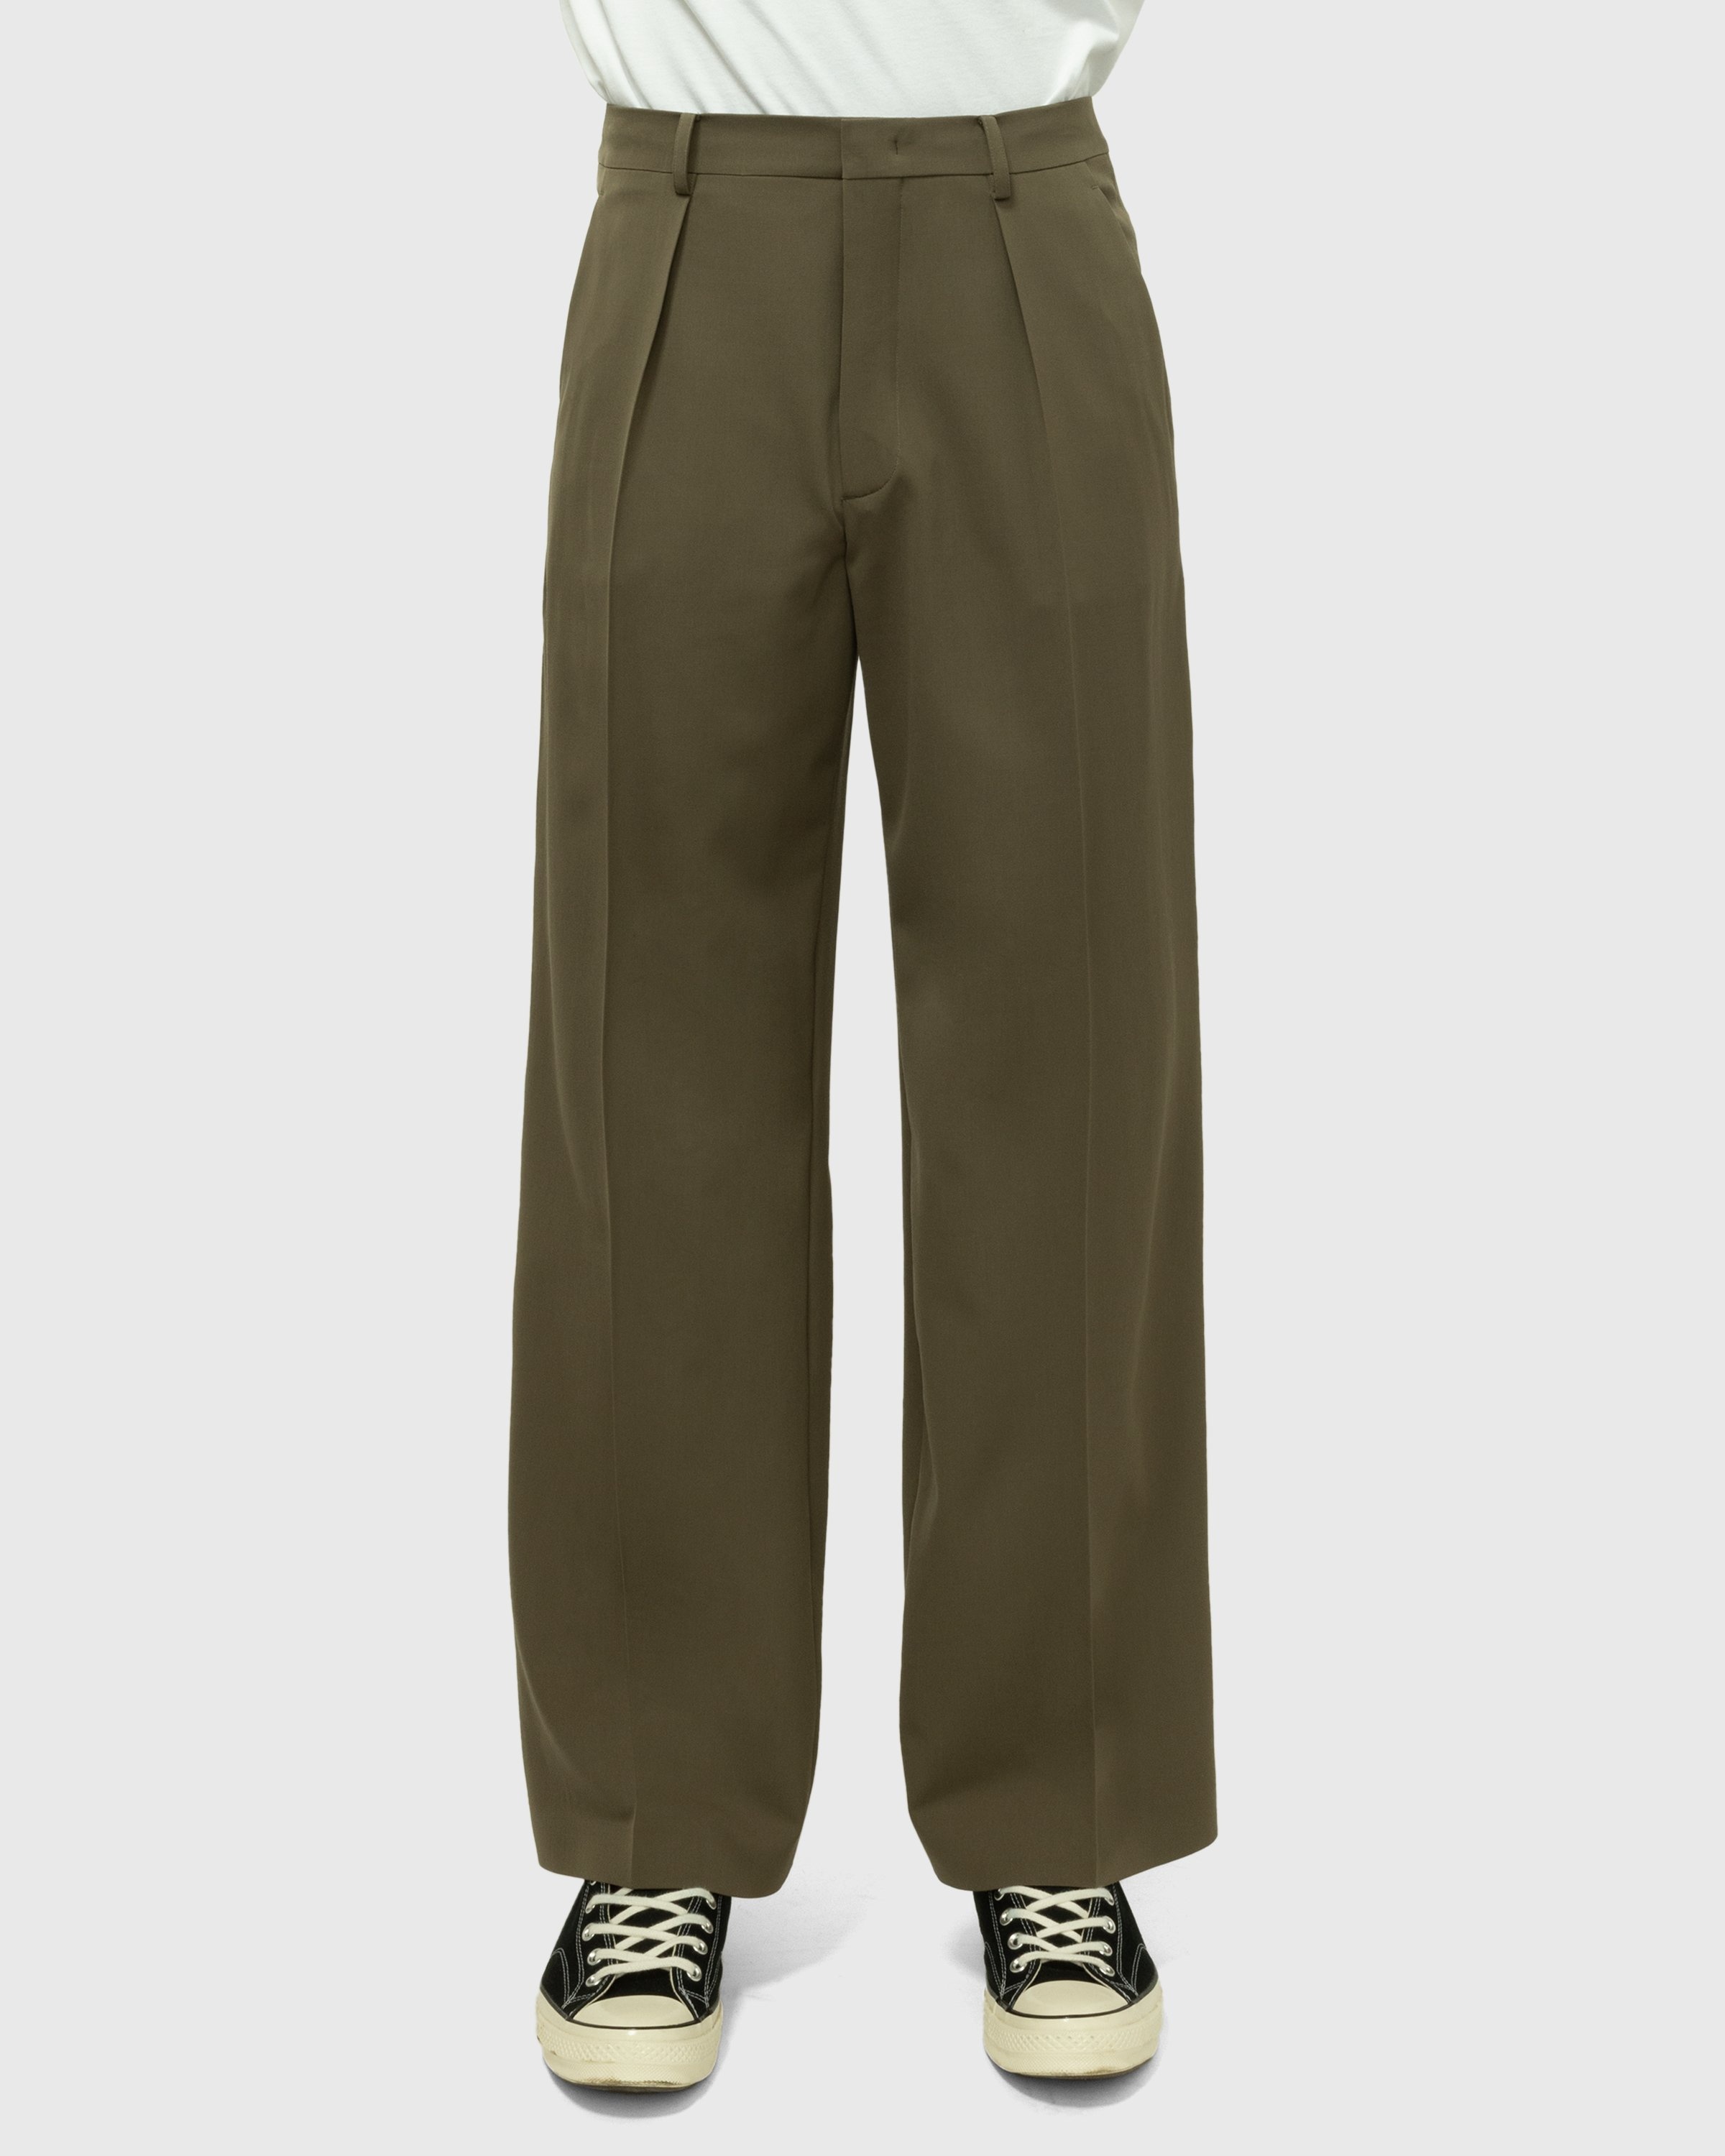 Jean Paul Gaultier – Classic Woven Trouser Khaki - Trousers - Brown - Image 2